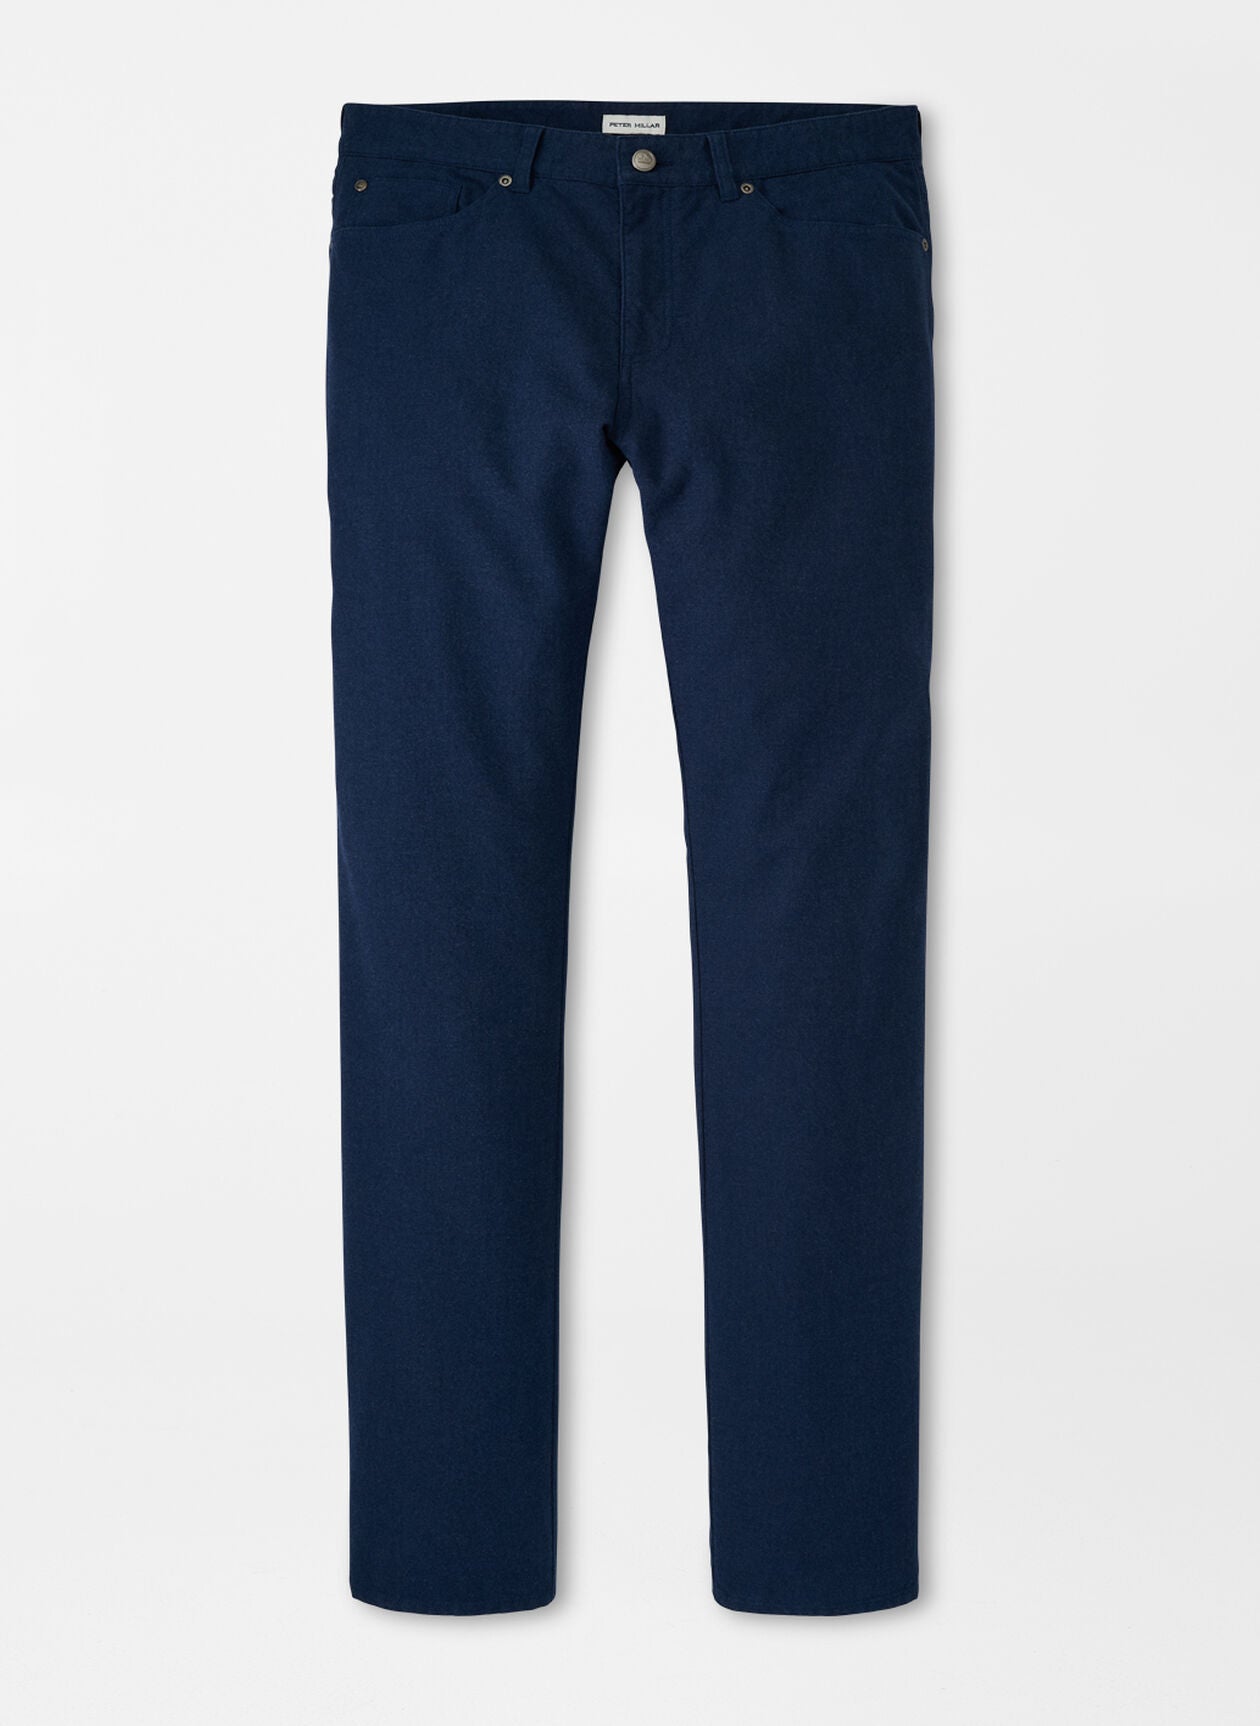 Mountainside Flannel Five-Pocket Pant - Atlantic Blue